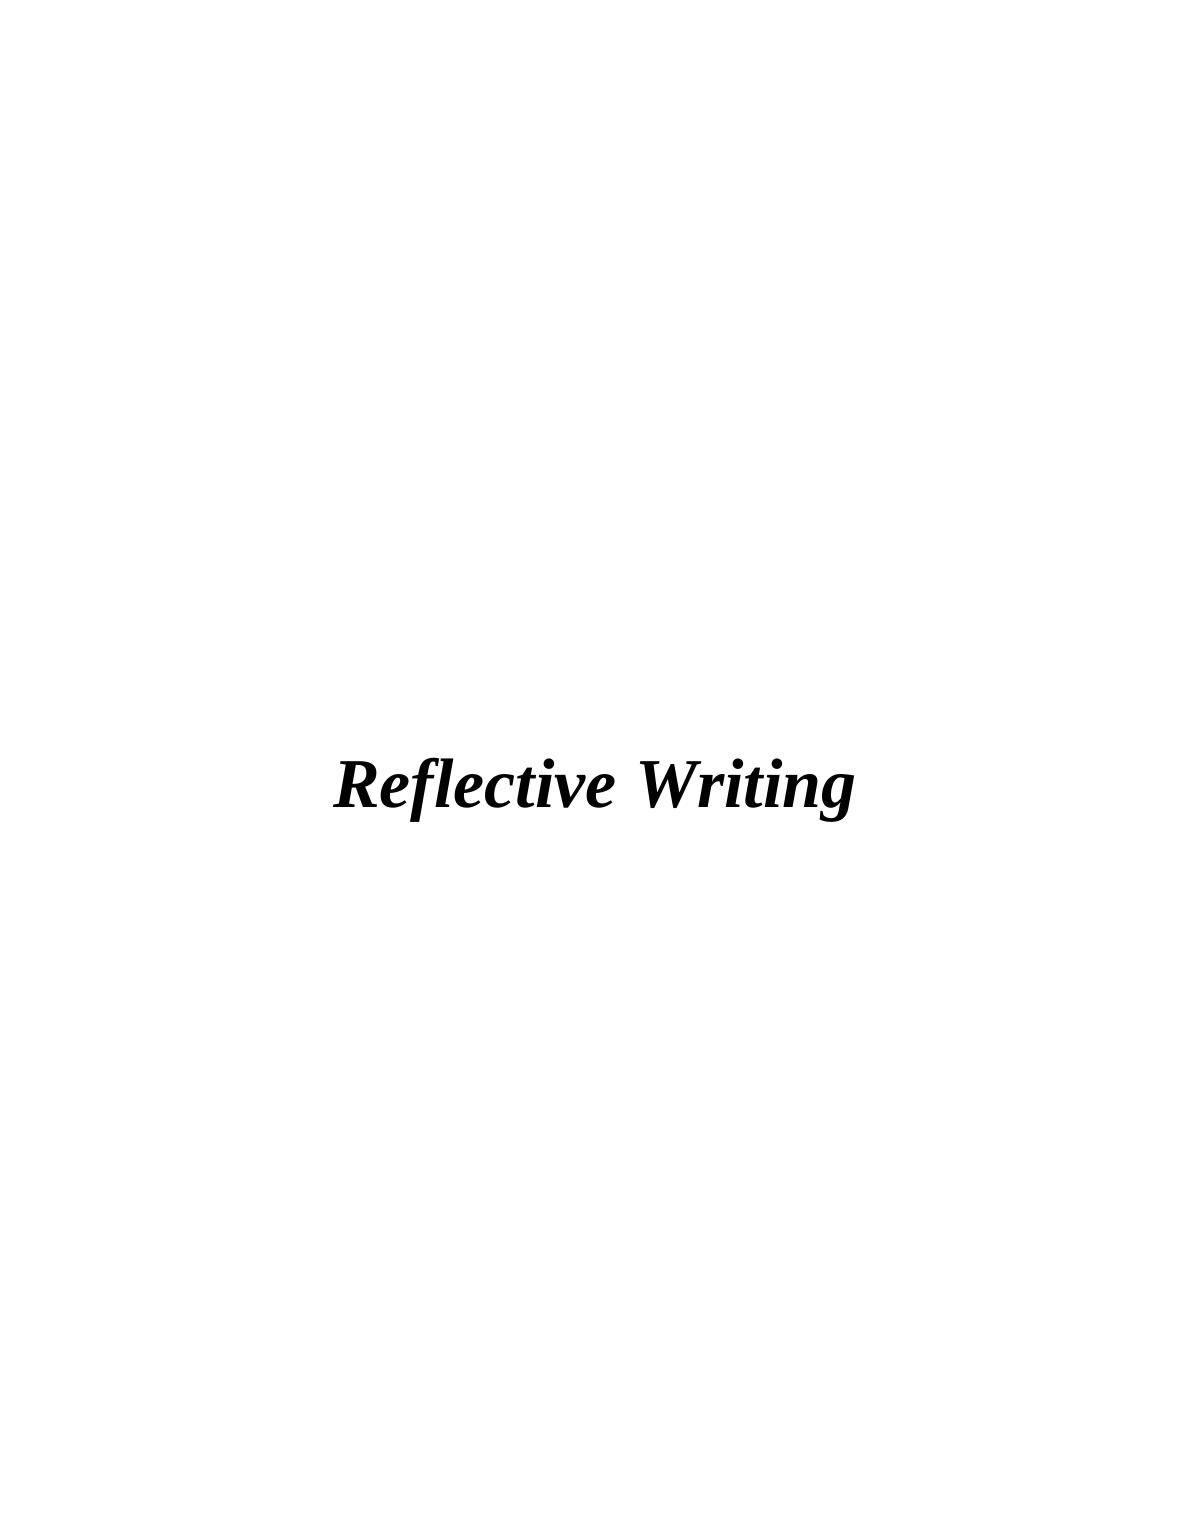 Reflective Writing_1